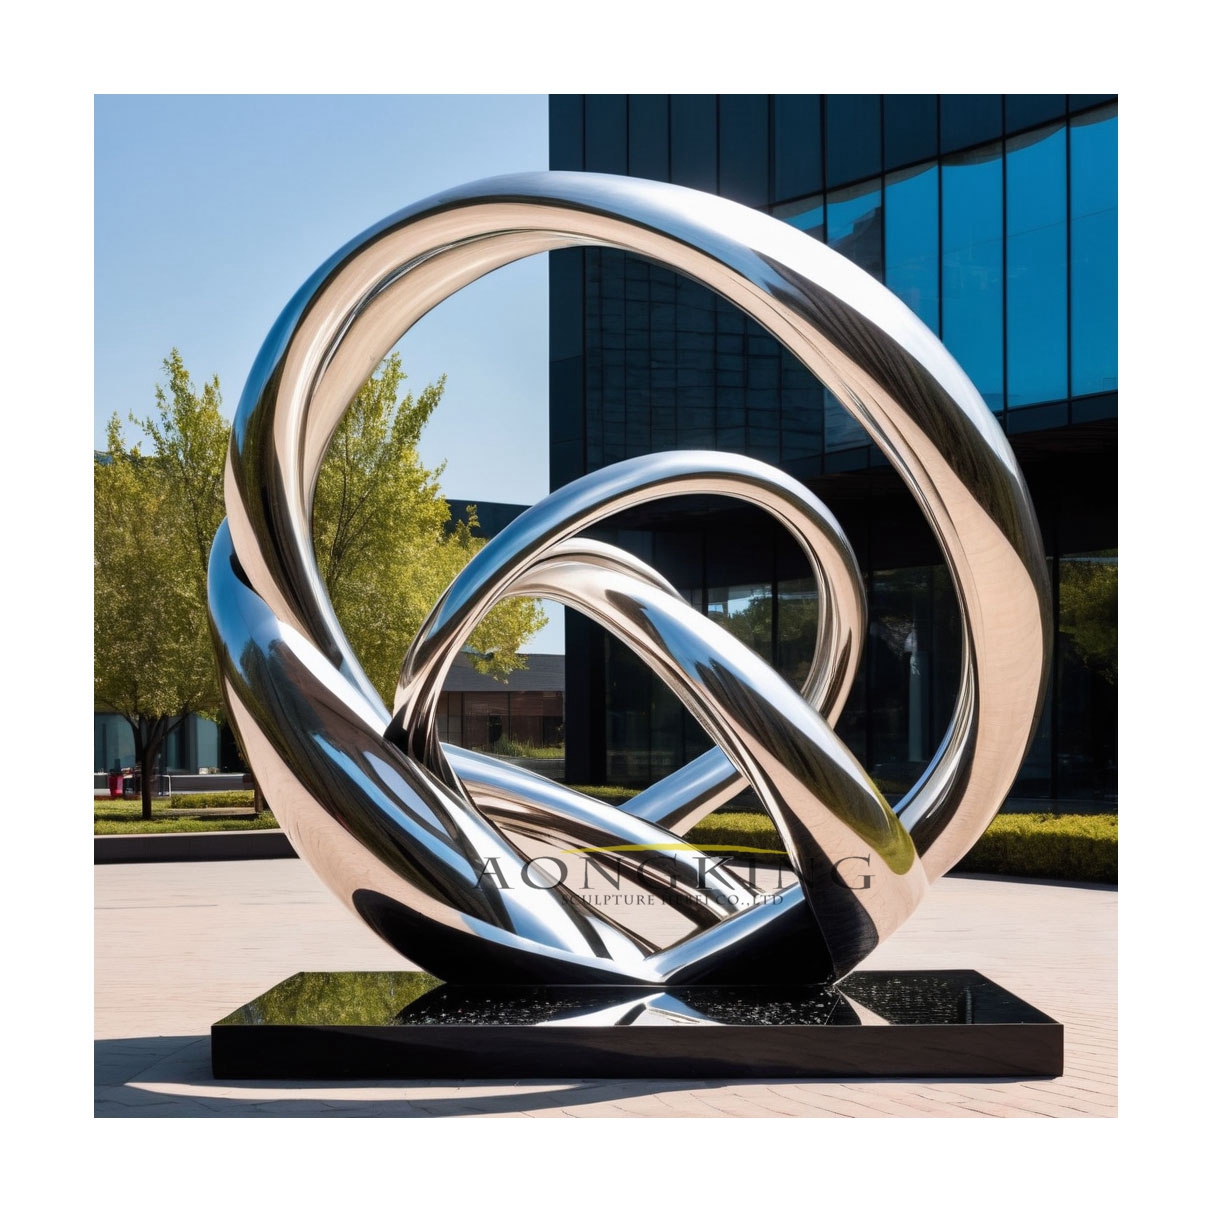 winding stainless steel sculpture